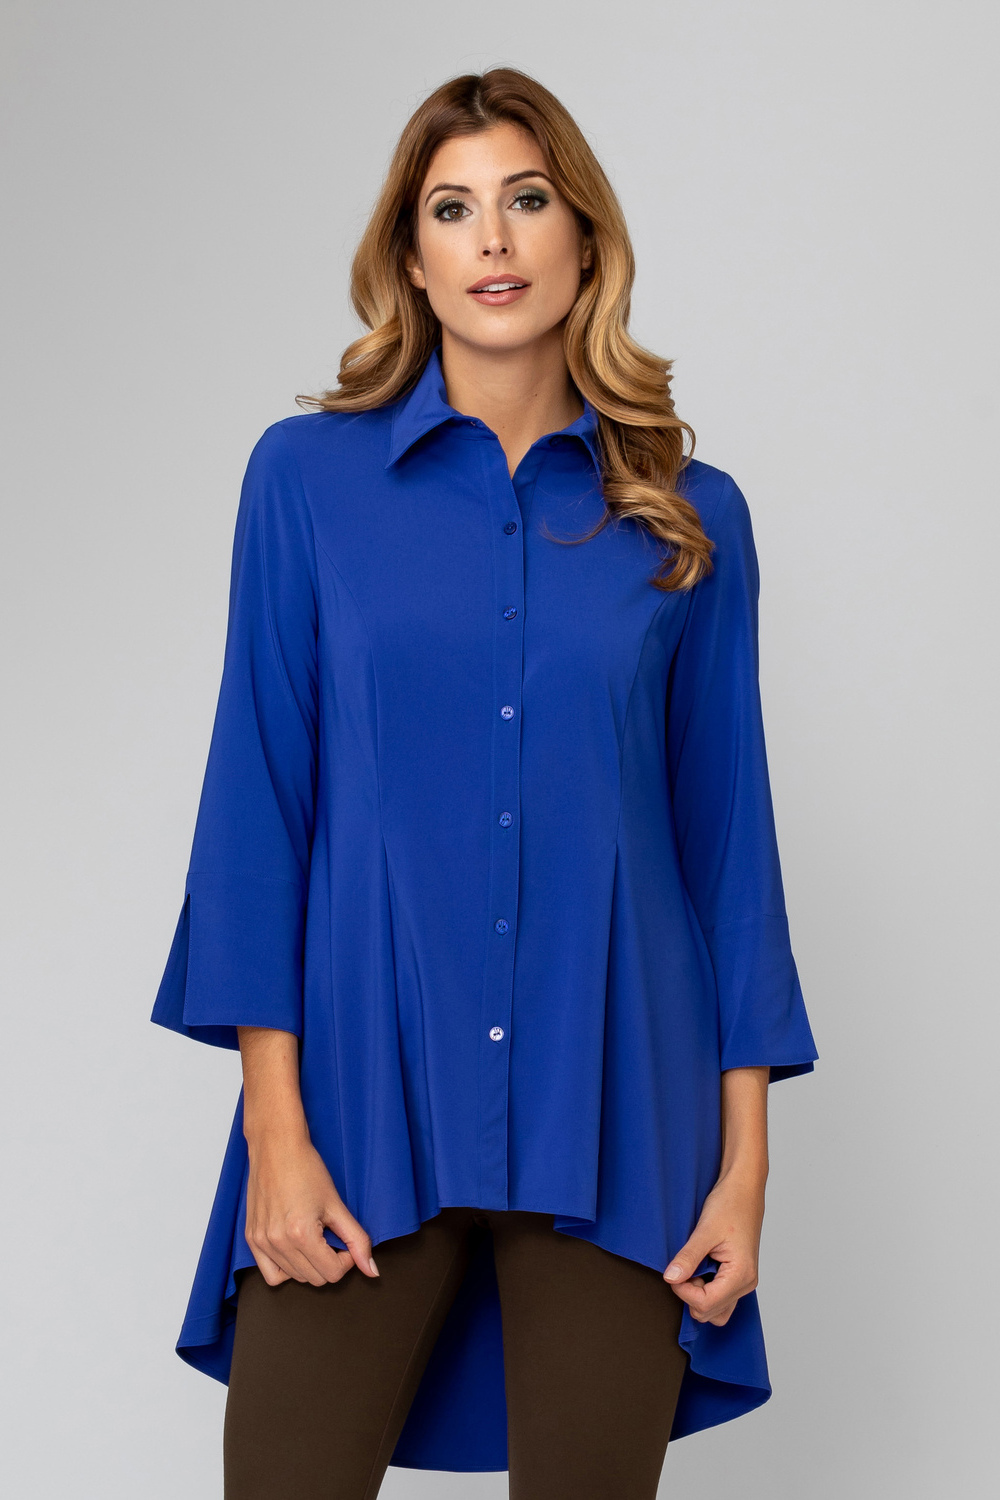 Joseph Ribkoff blouse style 193418. Blue